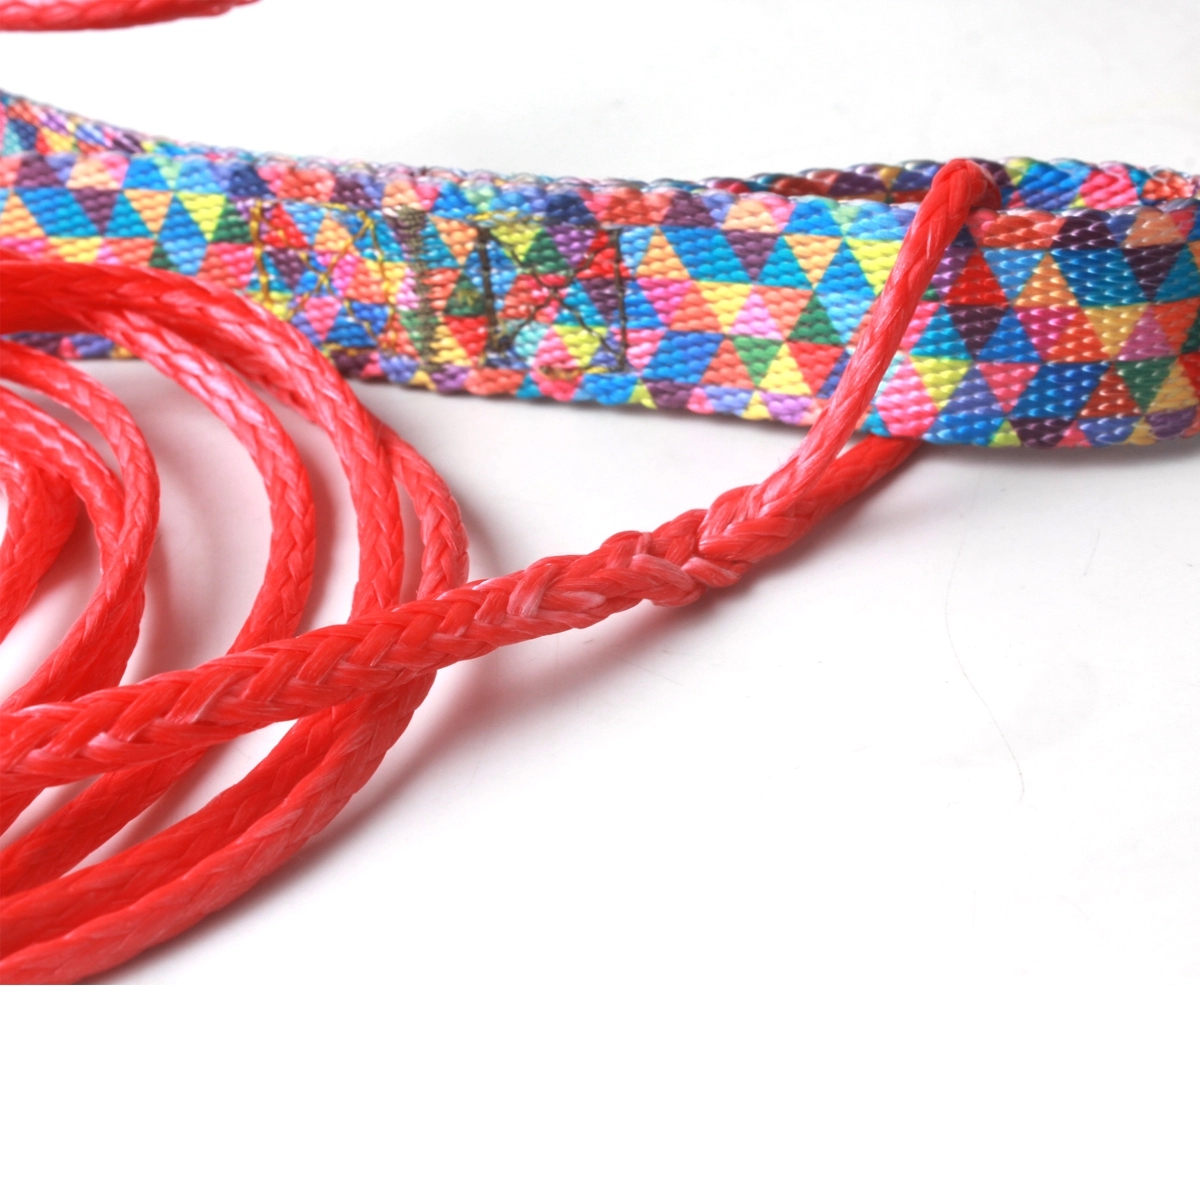 UHMWPE braid rope for dog leash